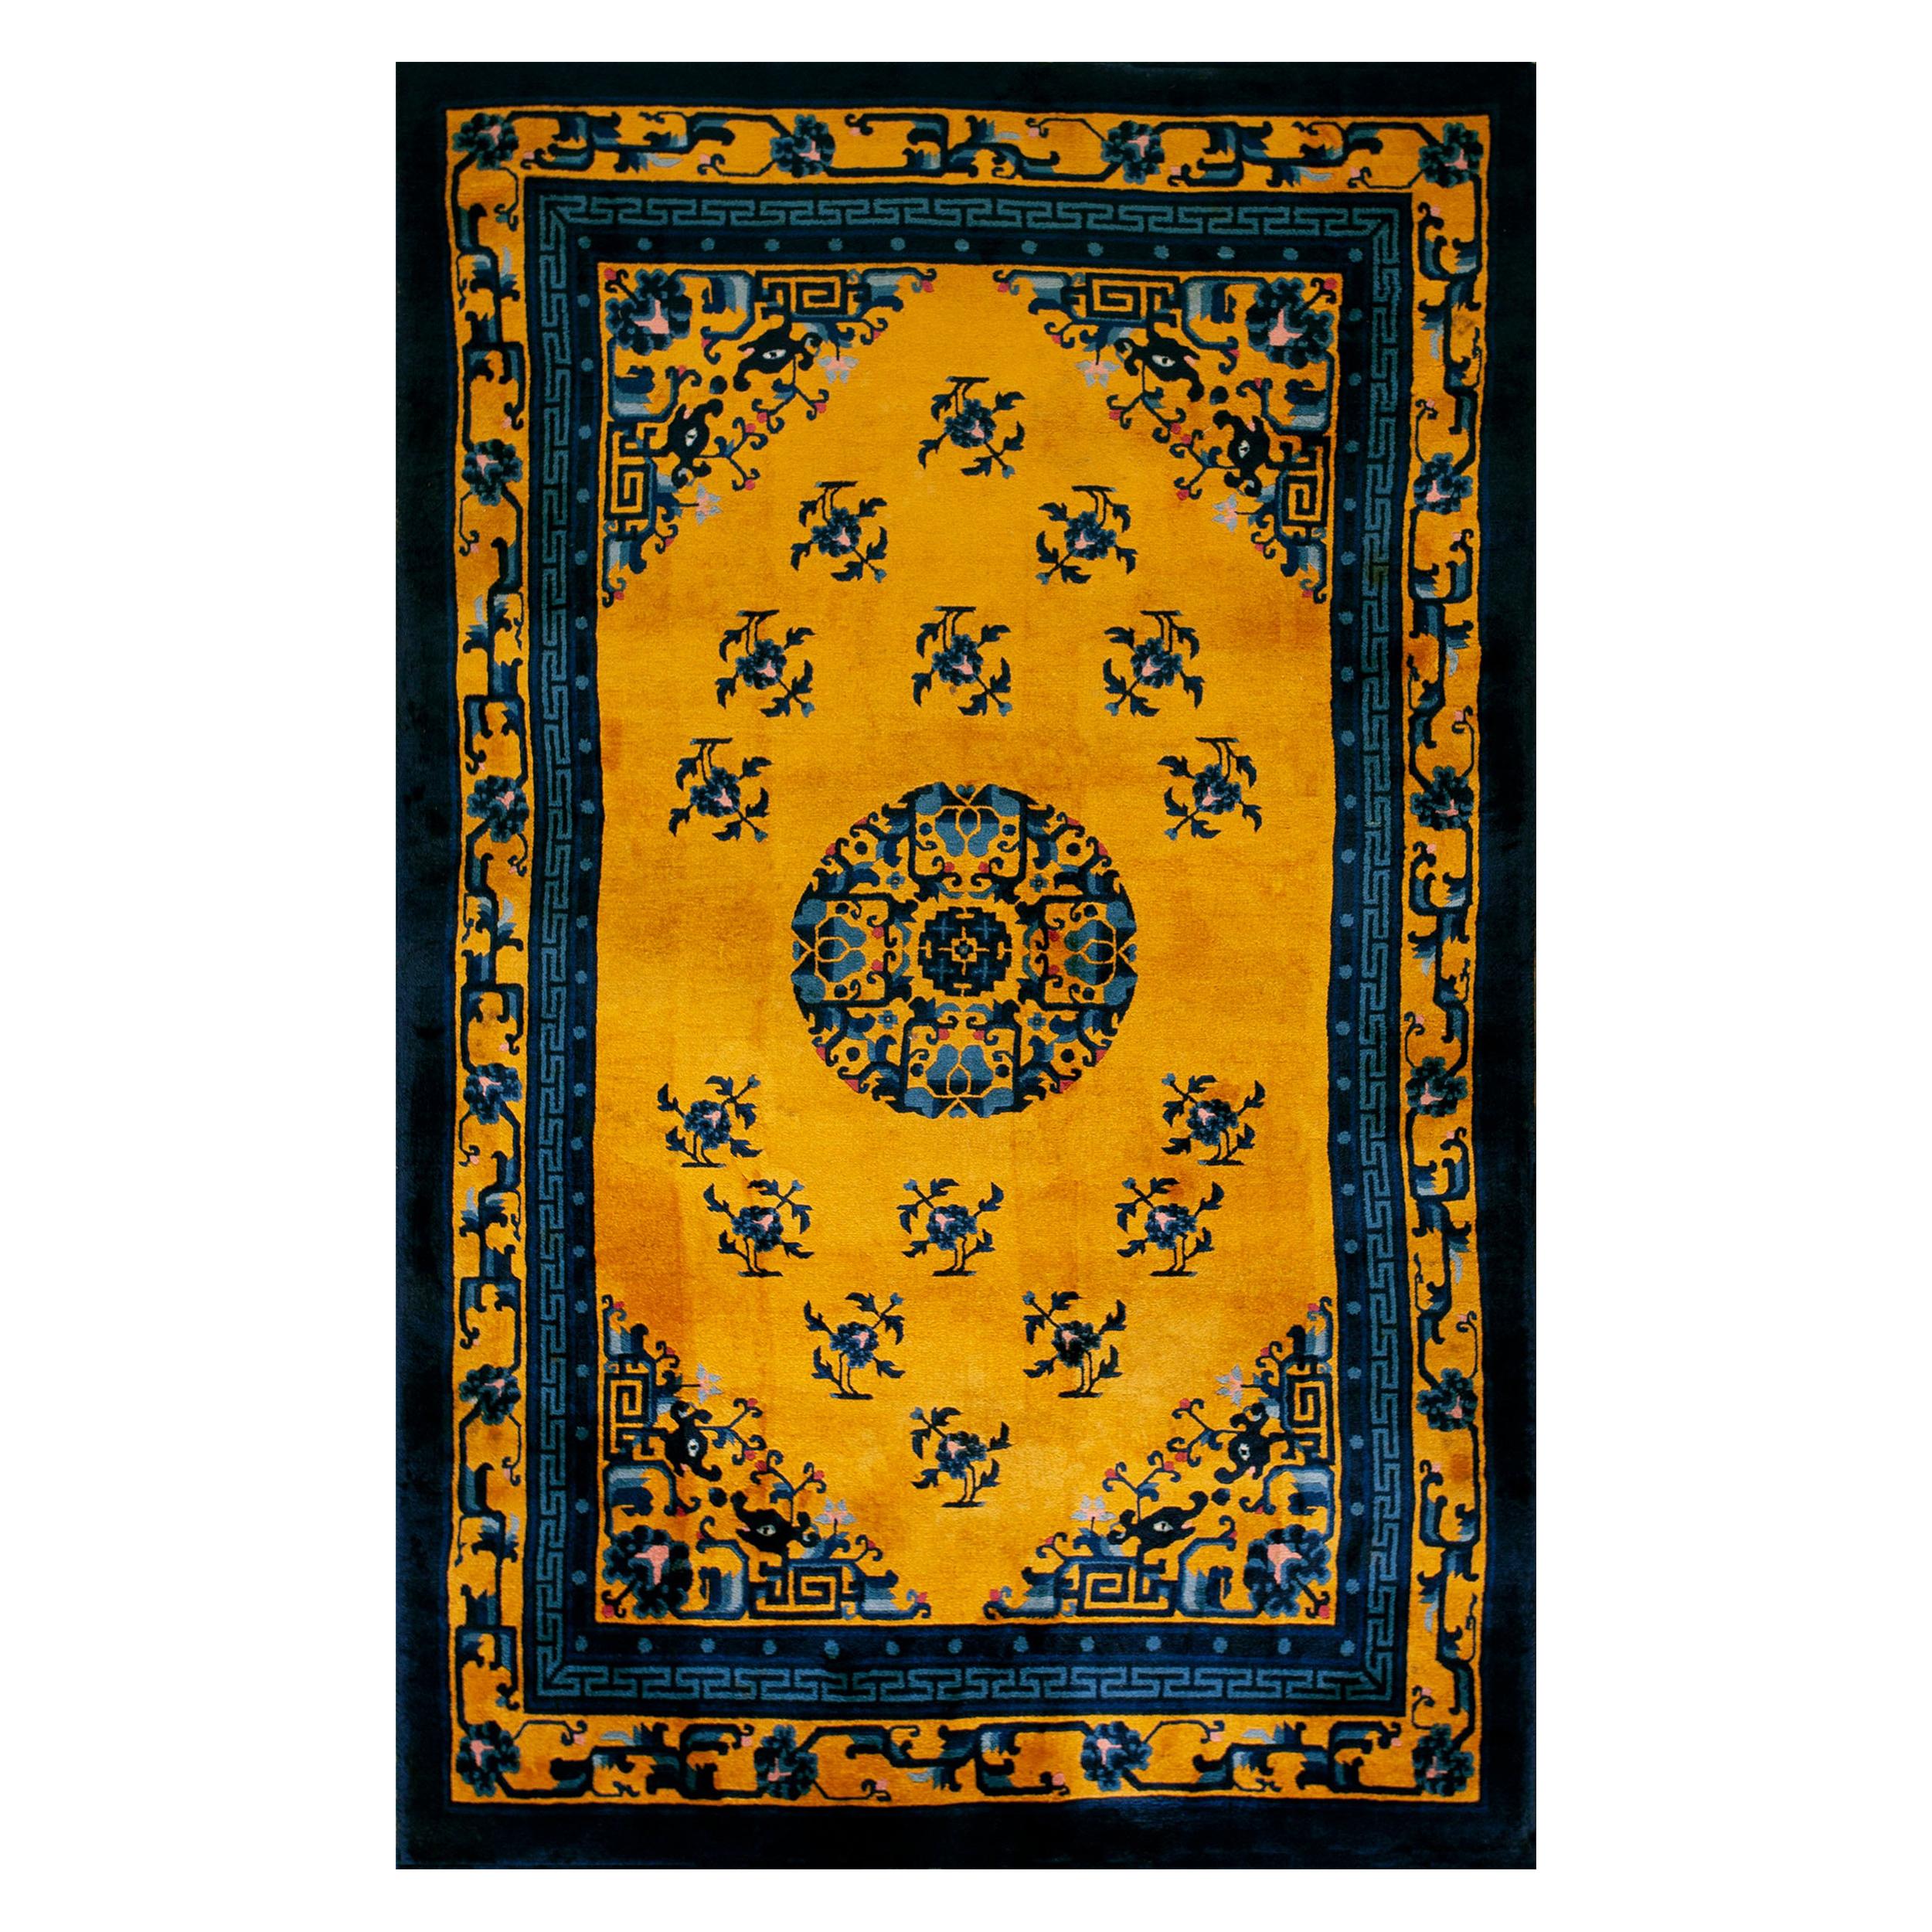 Early 20th Century Chinese Peking Carpet ( 5' x 8' - 152 x 244 )